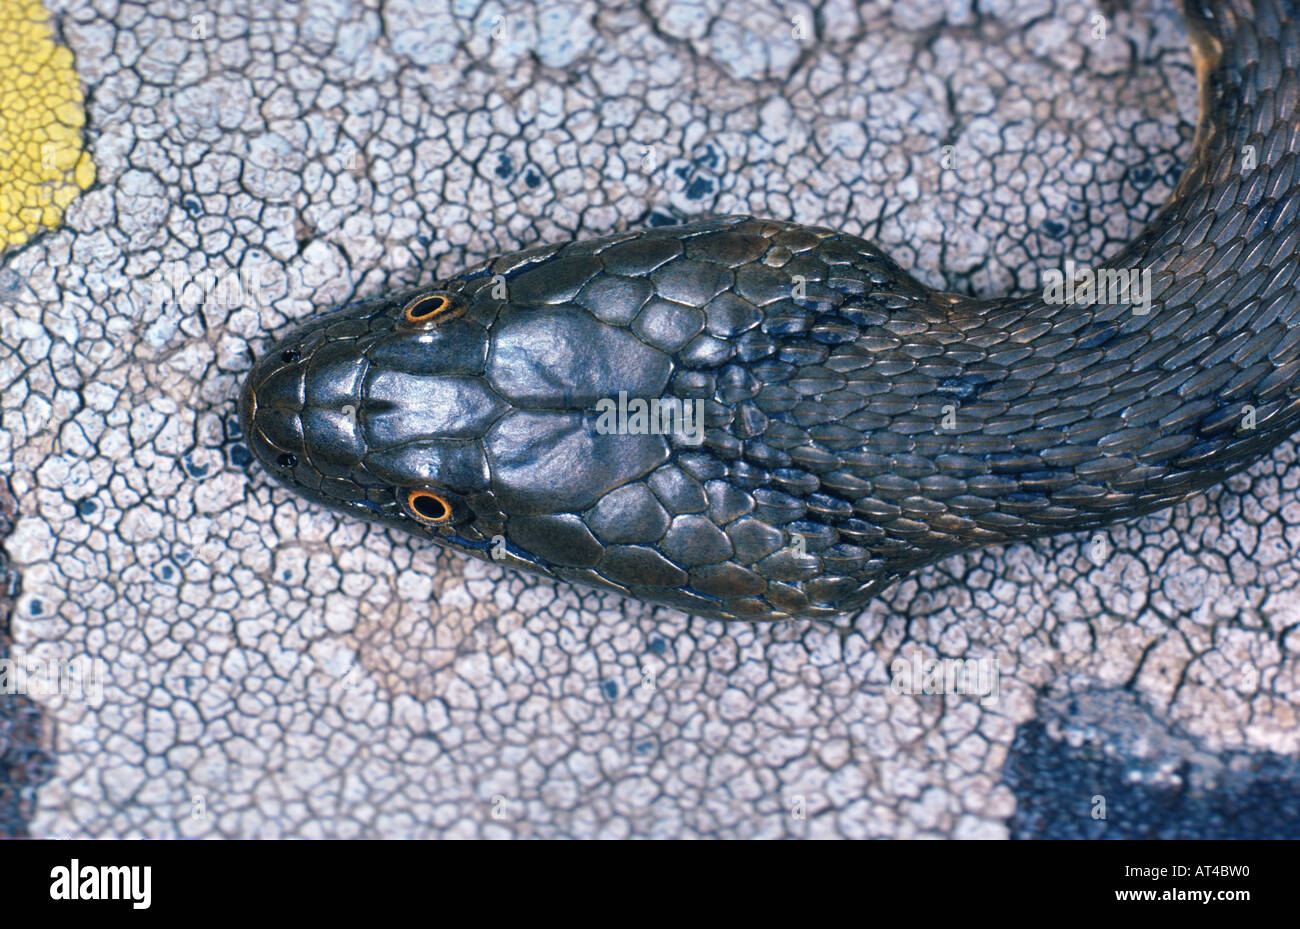 dice snake (Natrix tessellata), detail of head Stock Photo